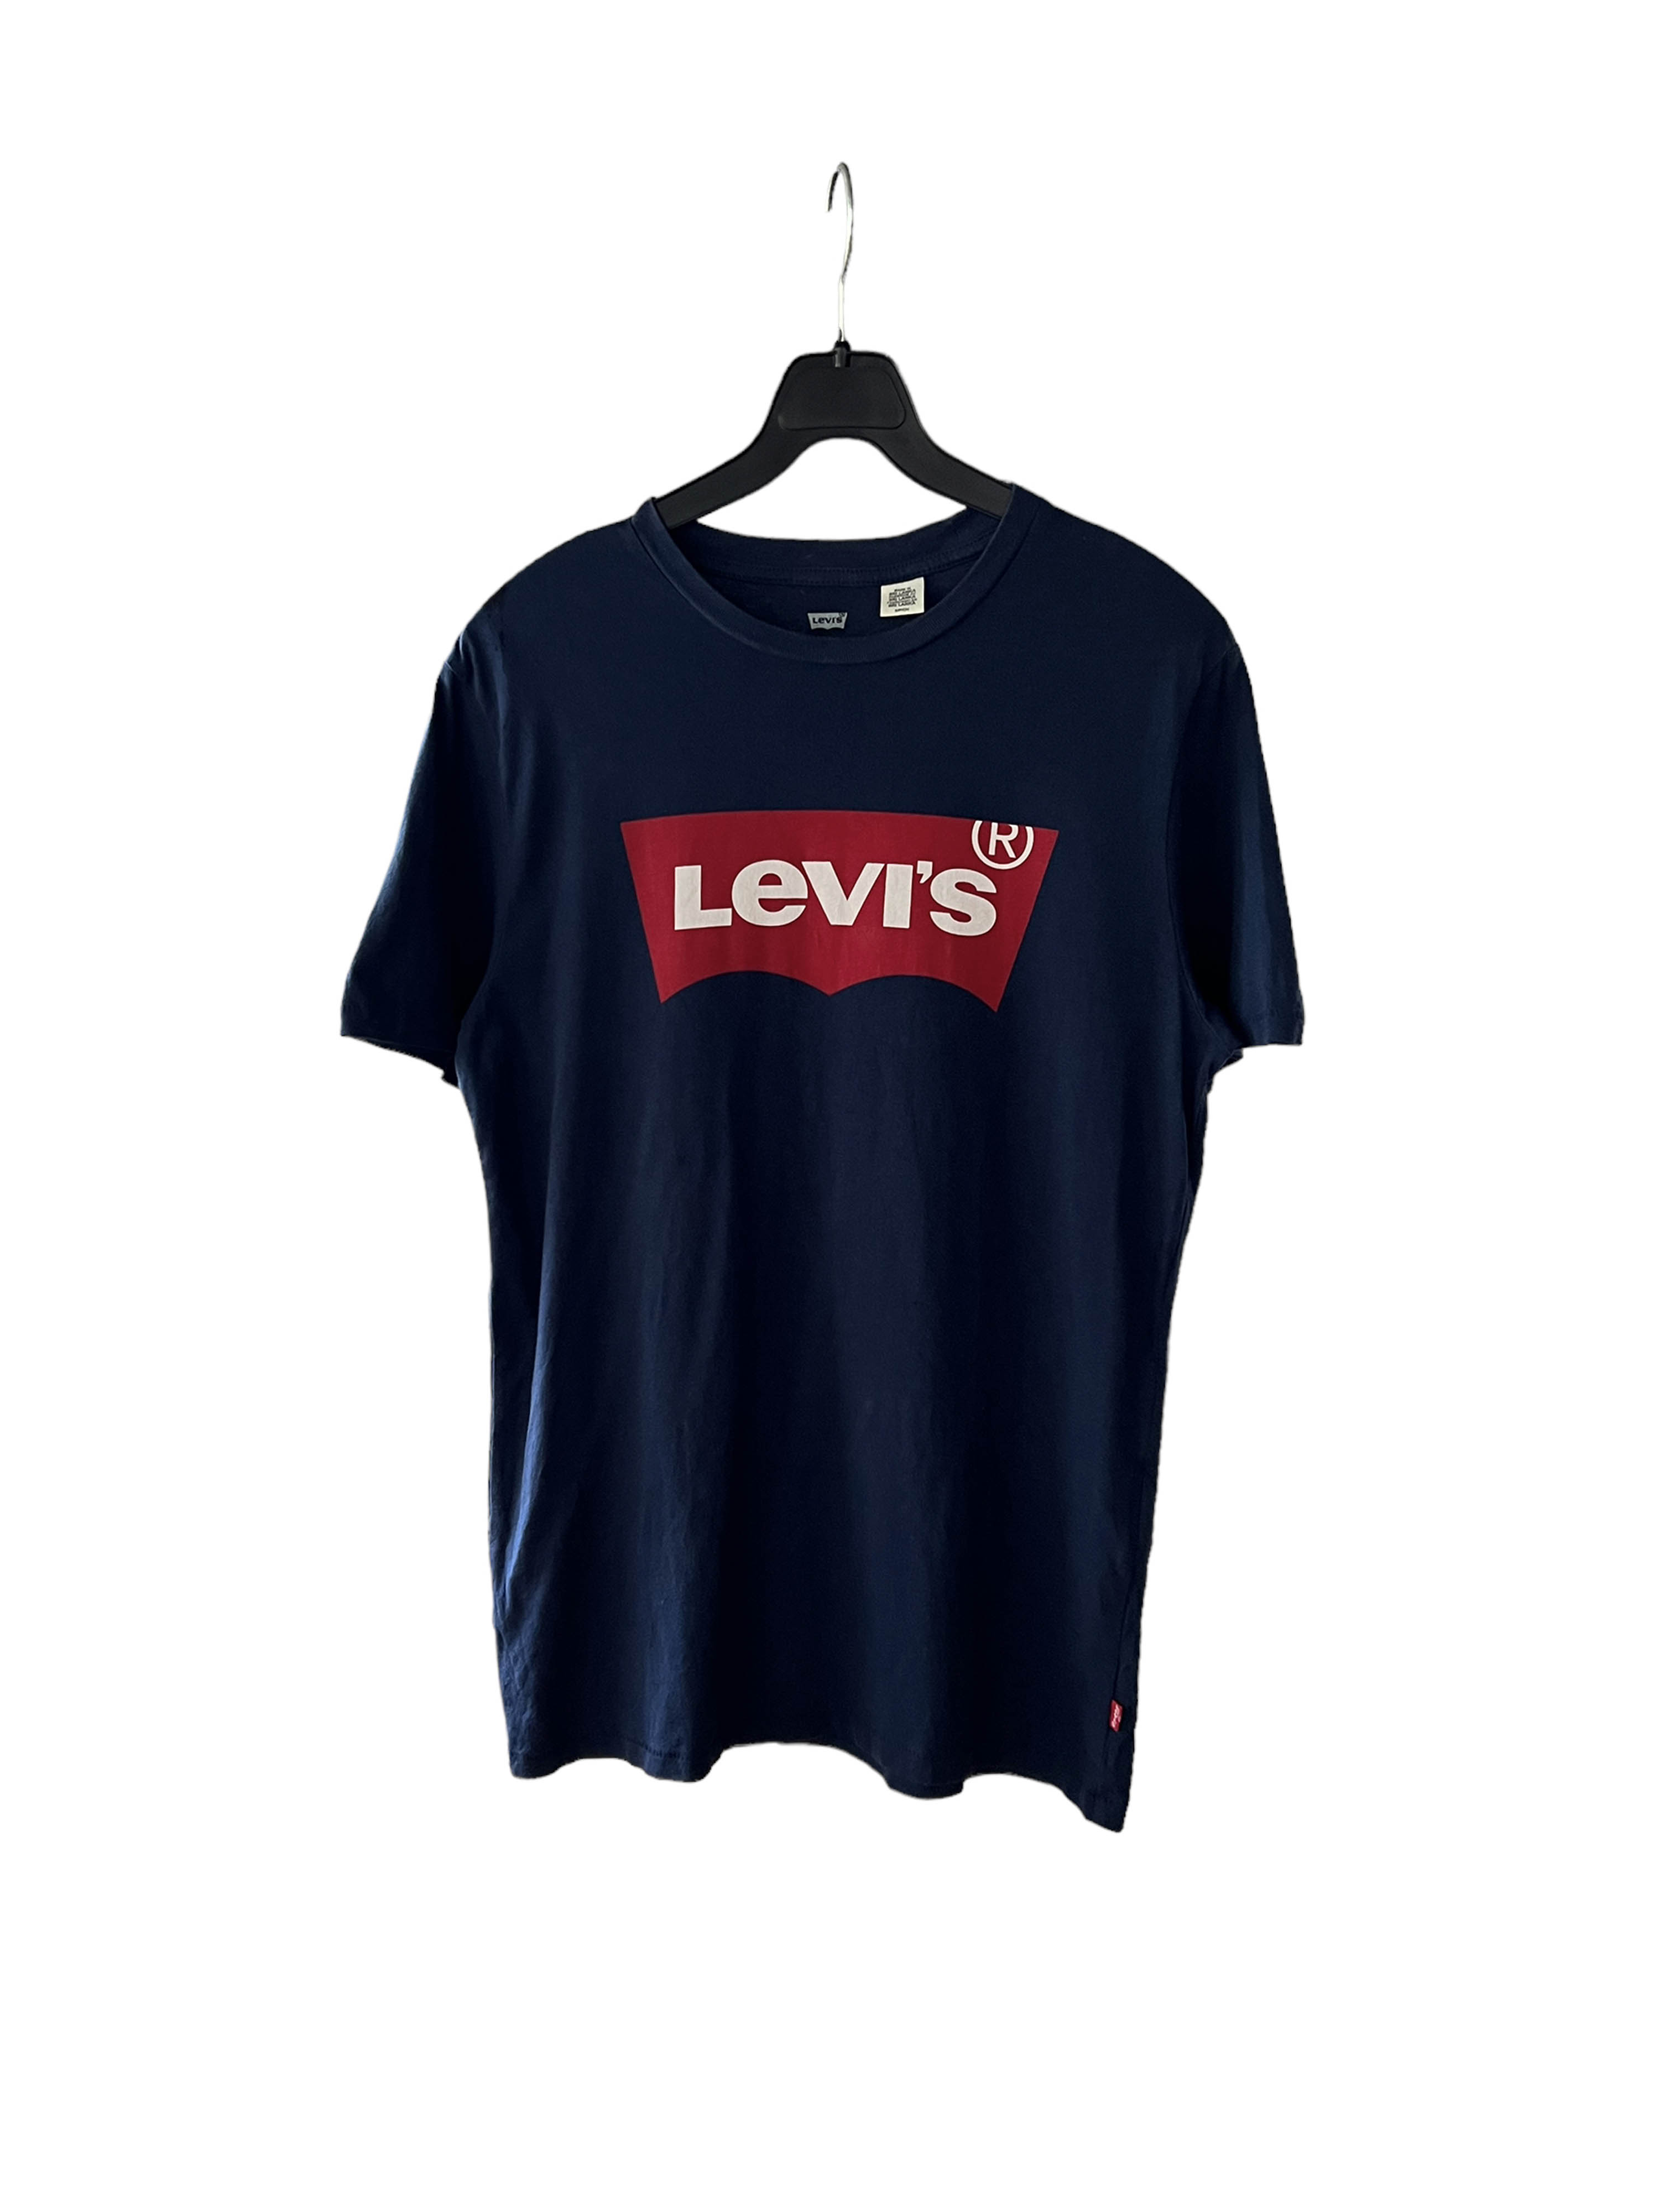 LEVIS logo t-shirts